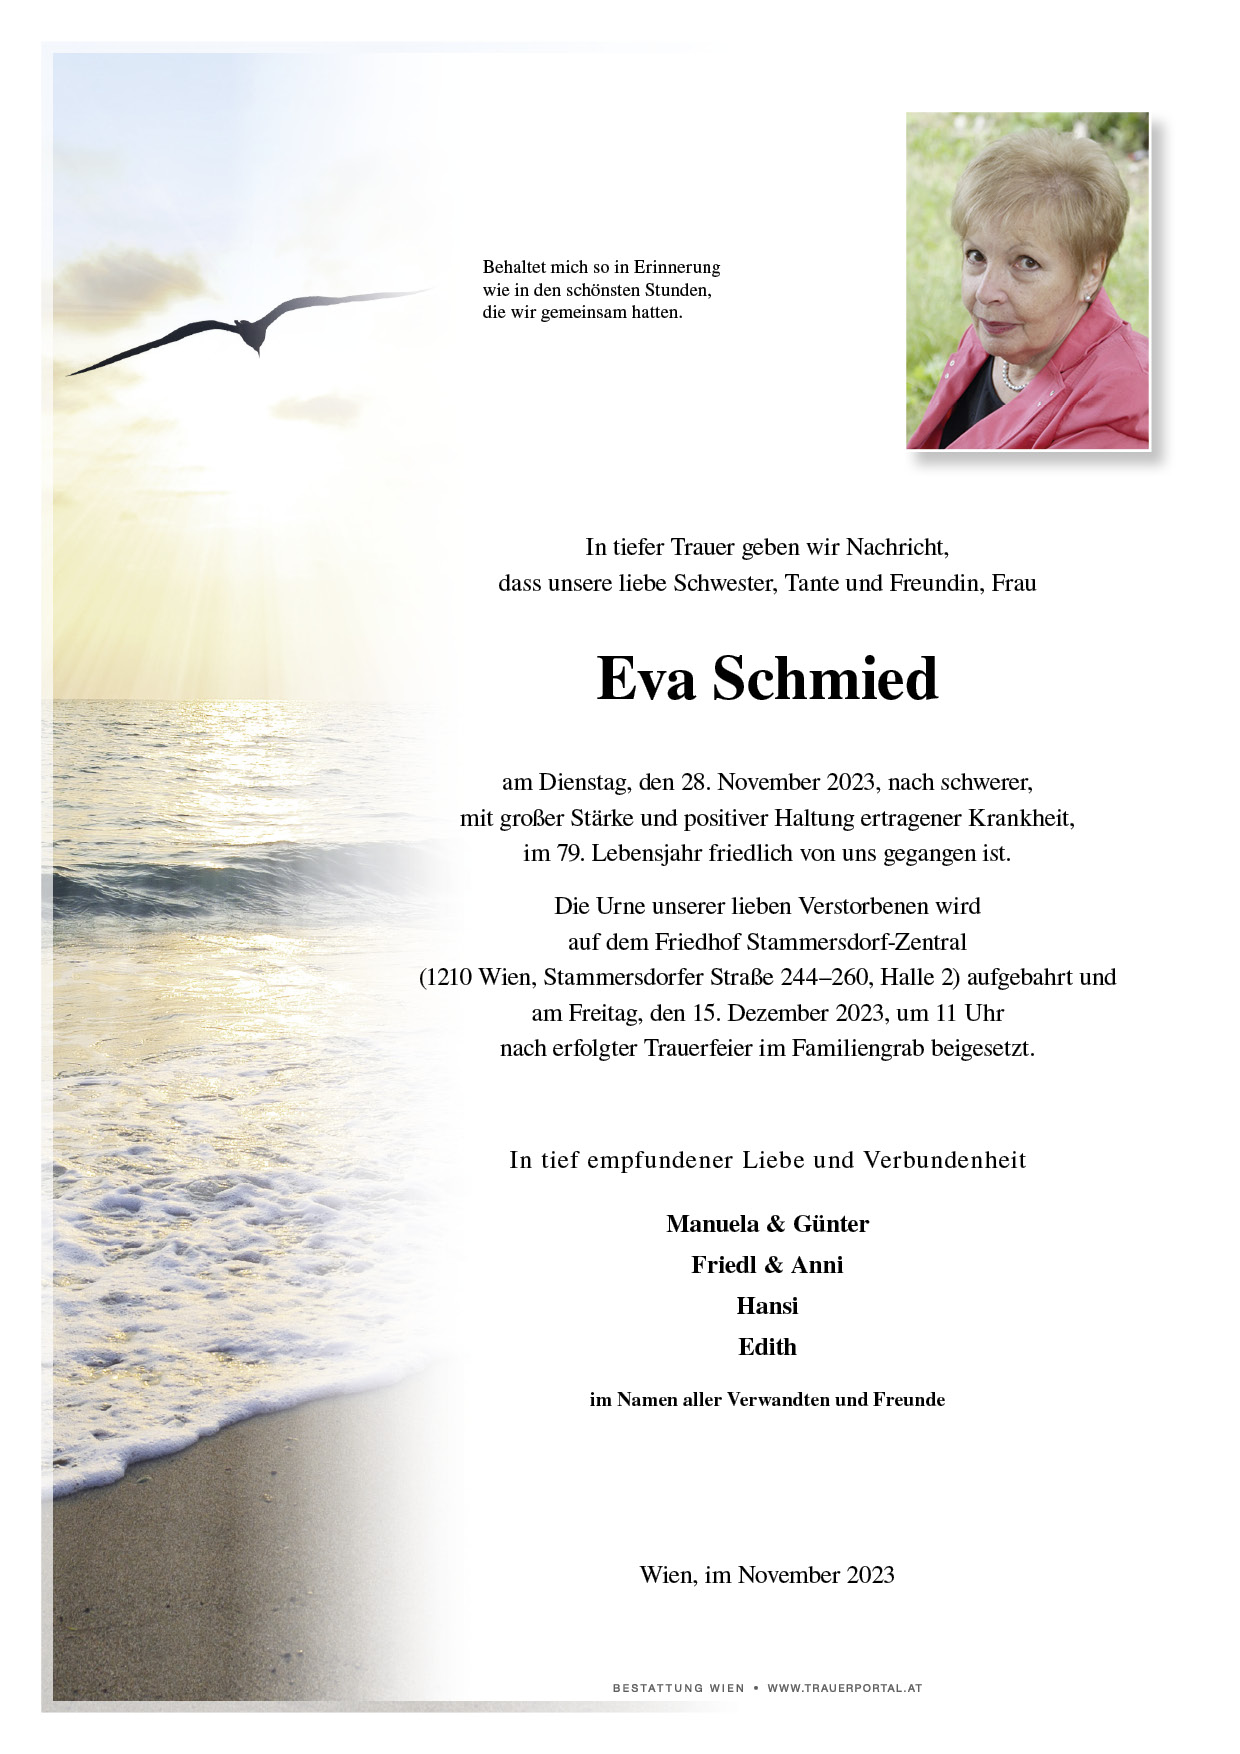 Eva Schmied